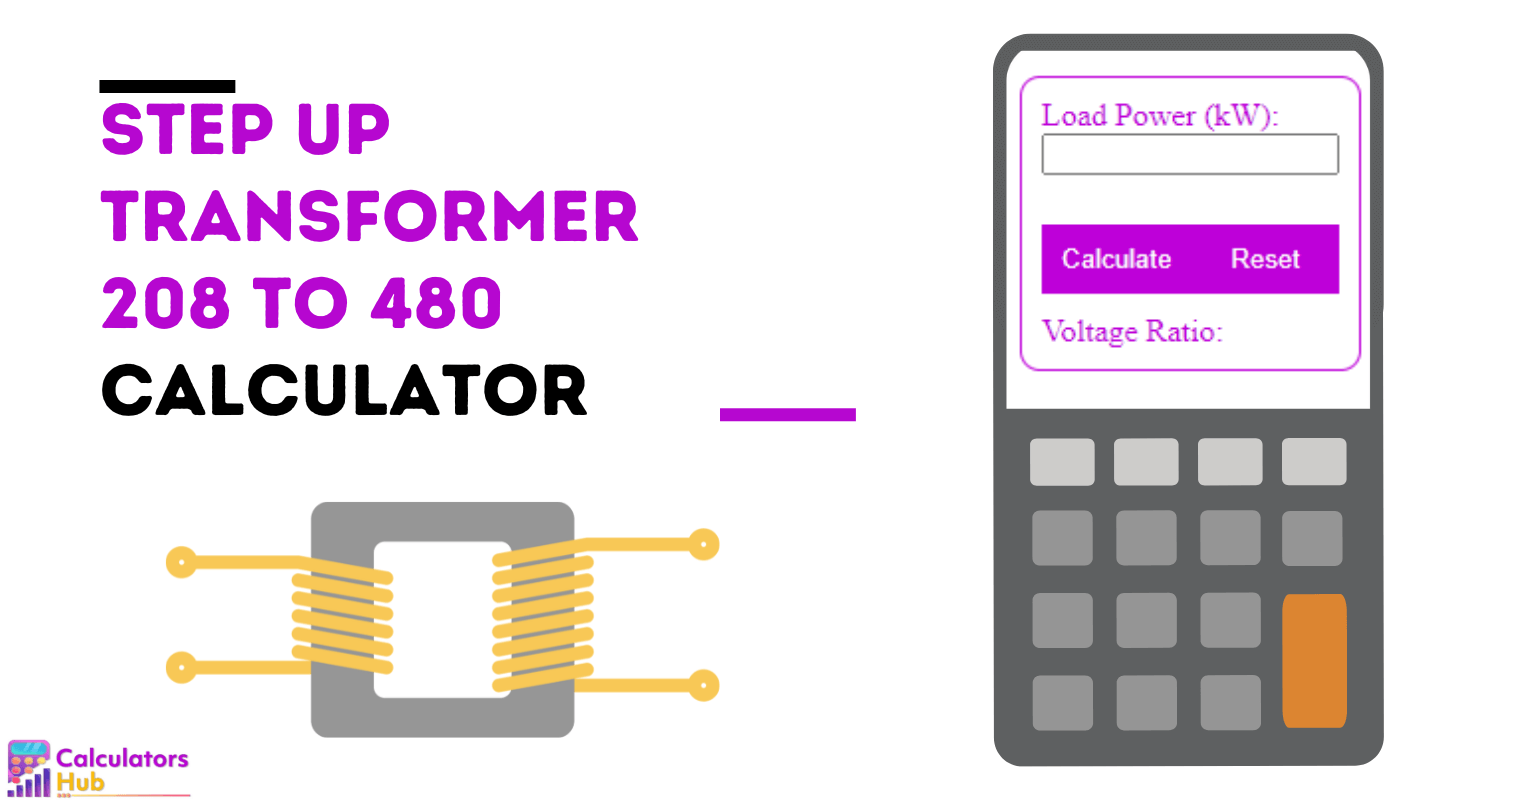 Step Up Transformer 208 to 480 Calculator